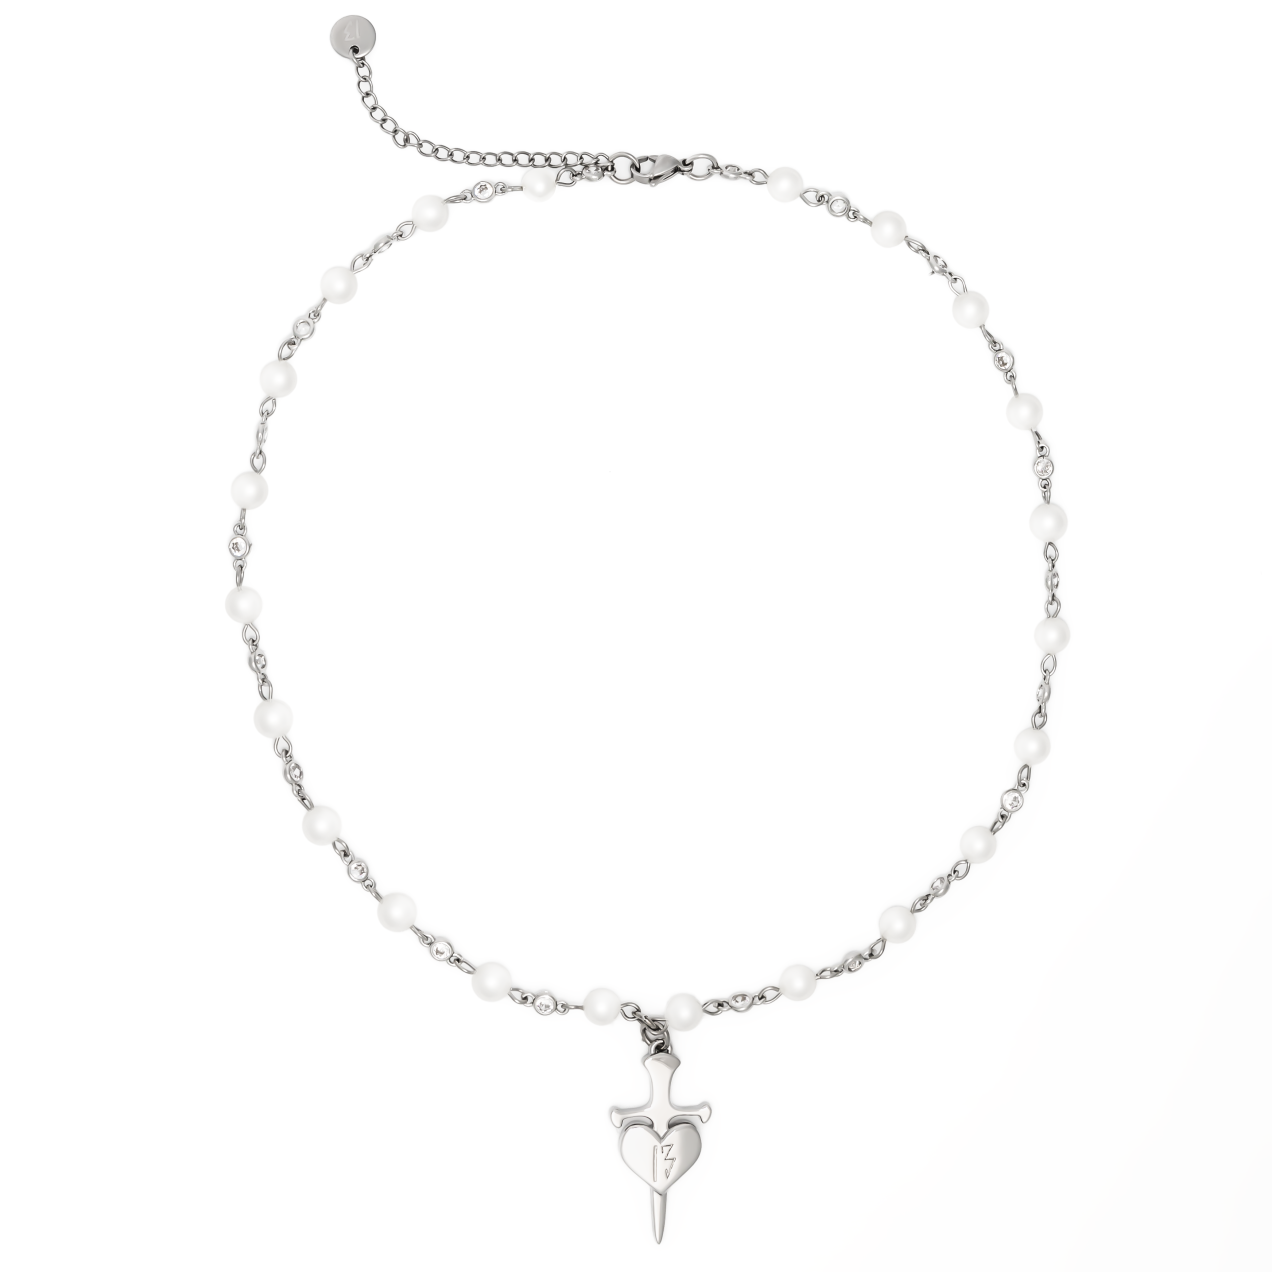 The Vanity Rosary - streetwear jewelry